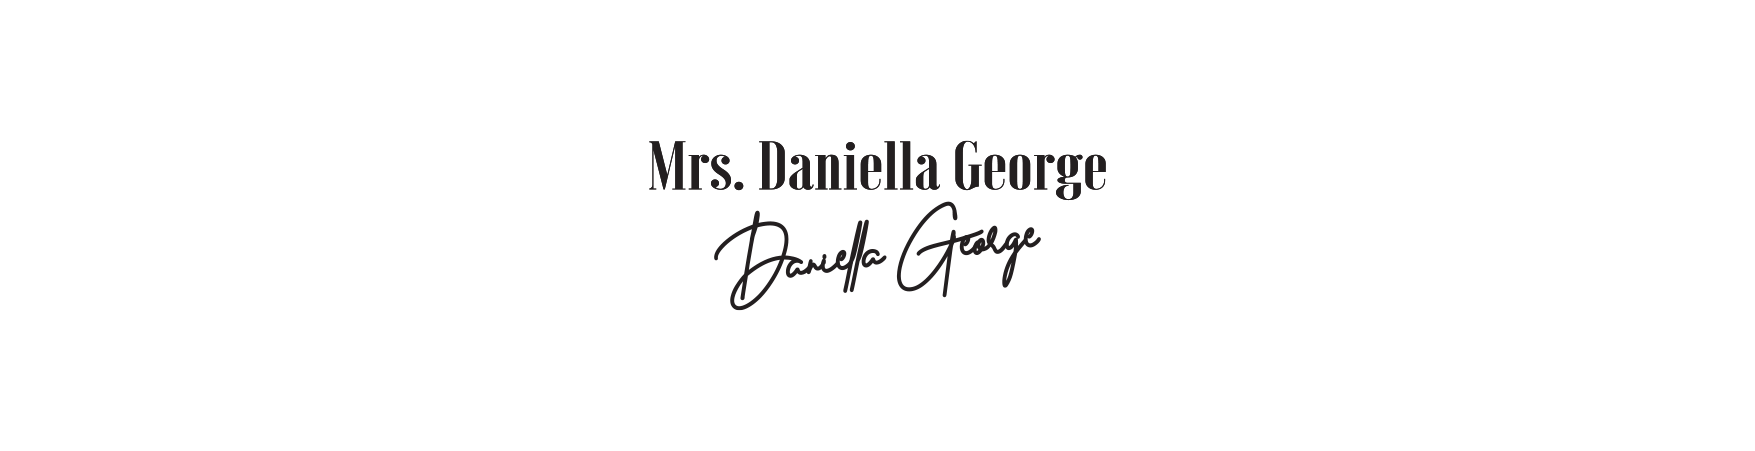 Mrs. Daniella George